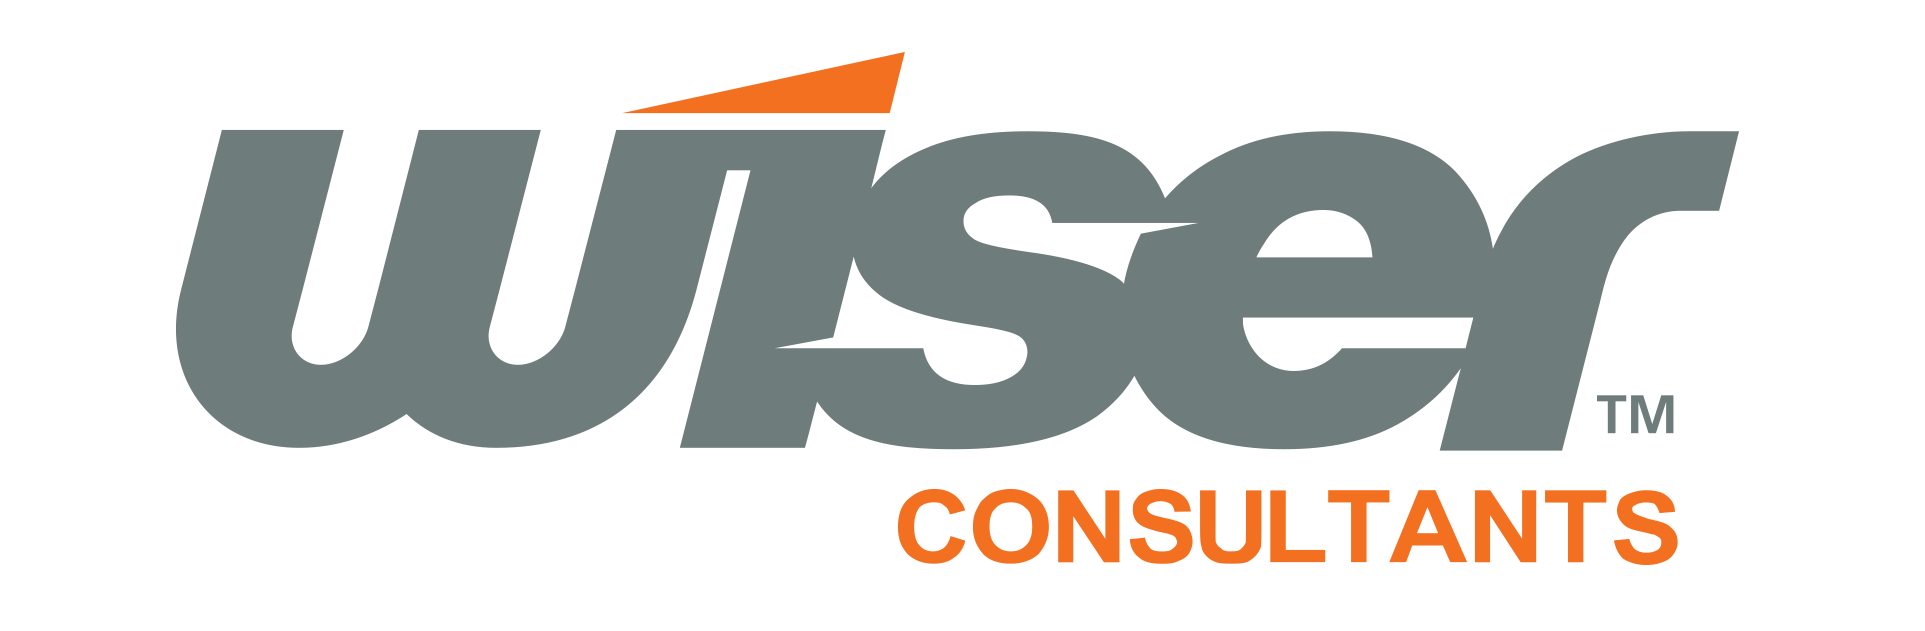 Wiser-Consultants-logo